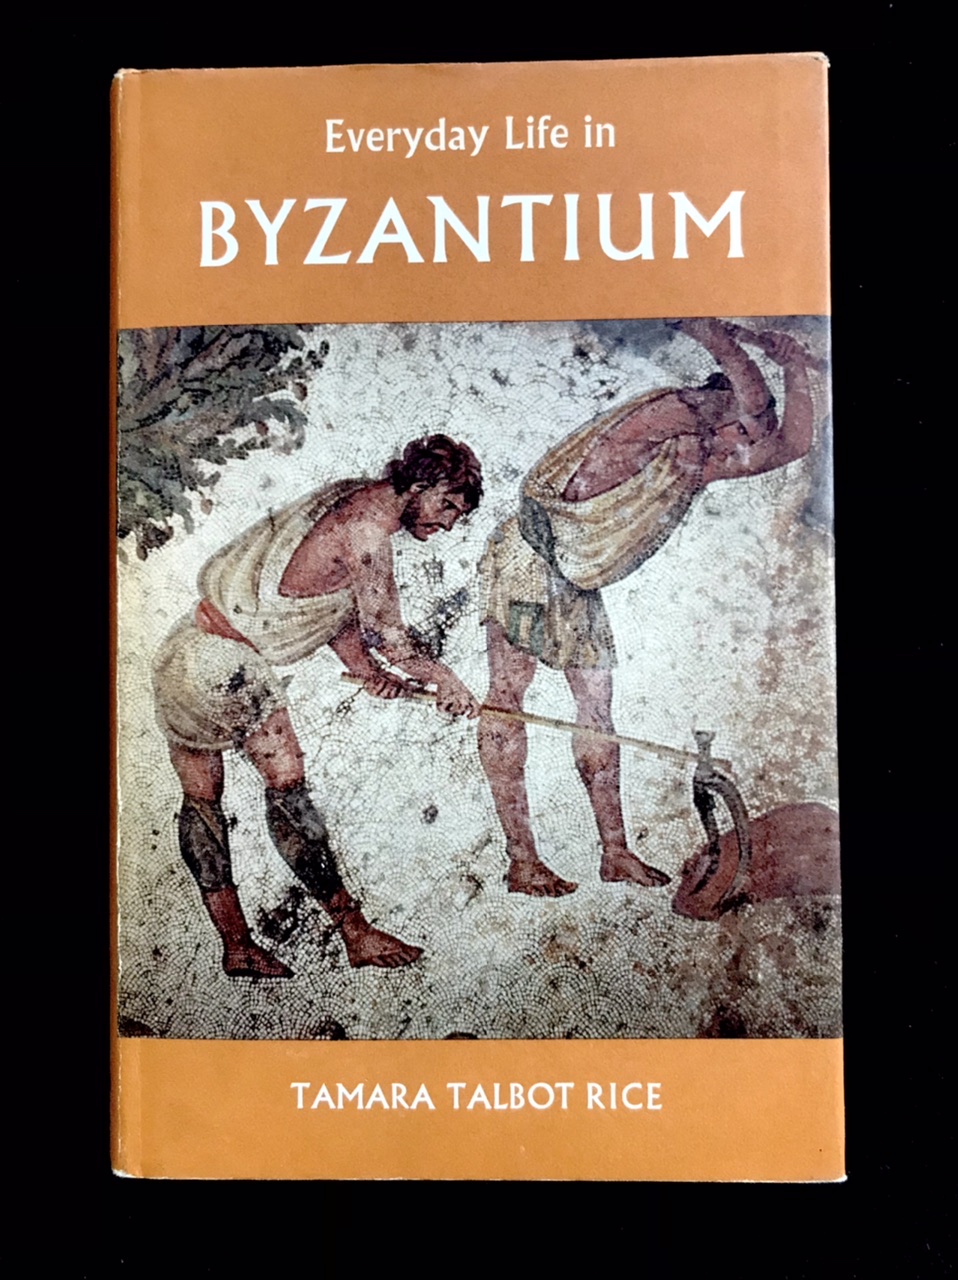 Everyday Life In Byzantium by Tamara Talbot Rice